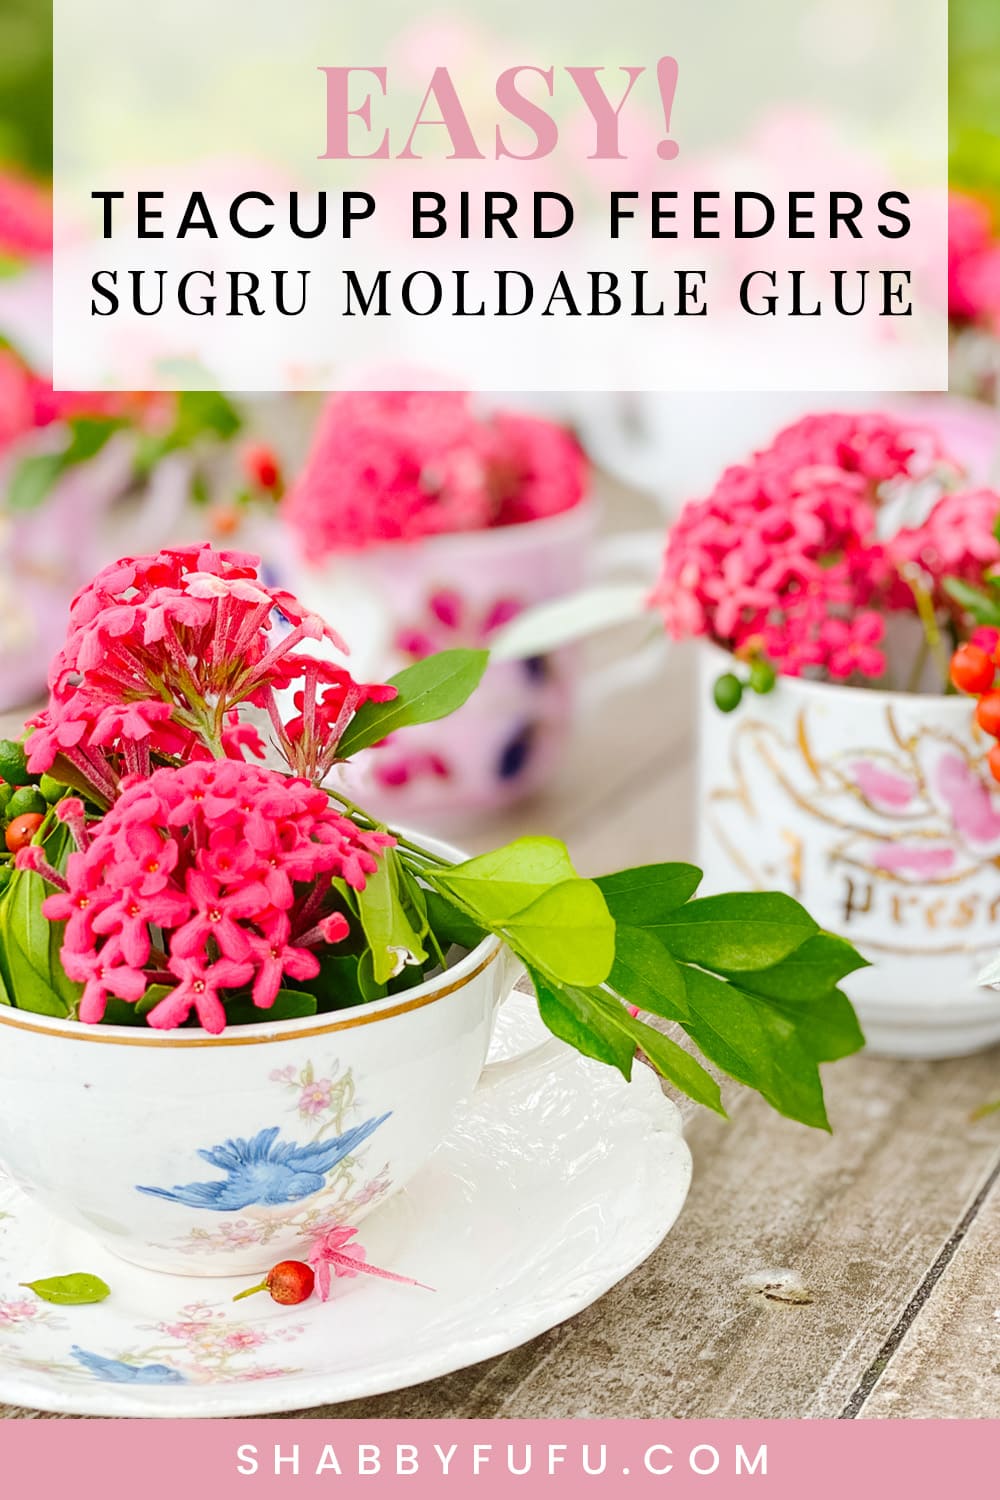 Easy Teacup Birdfeeder - With Sugru Moldable Glue 